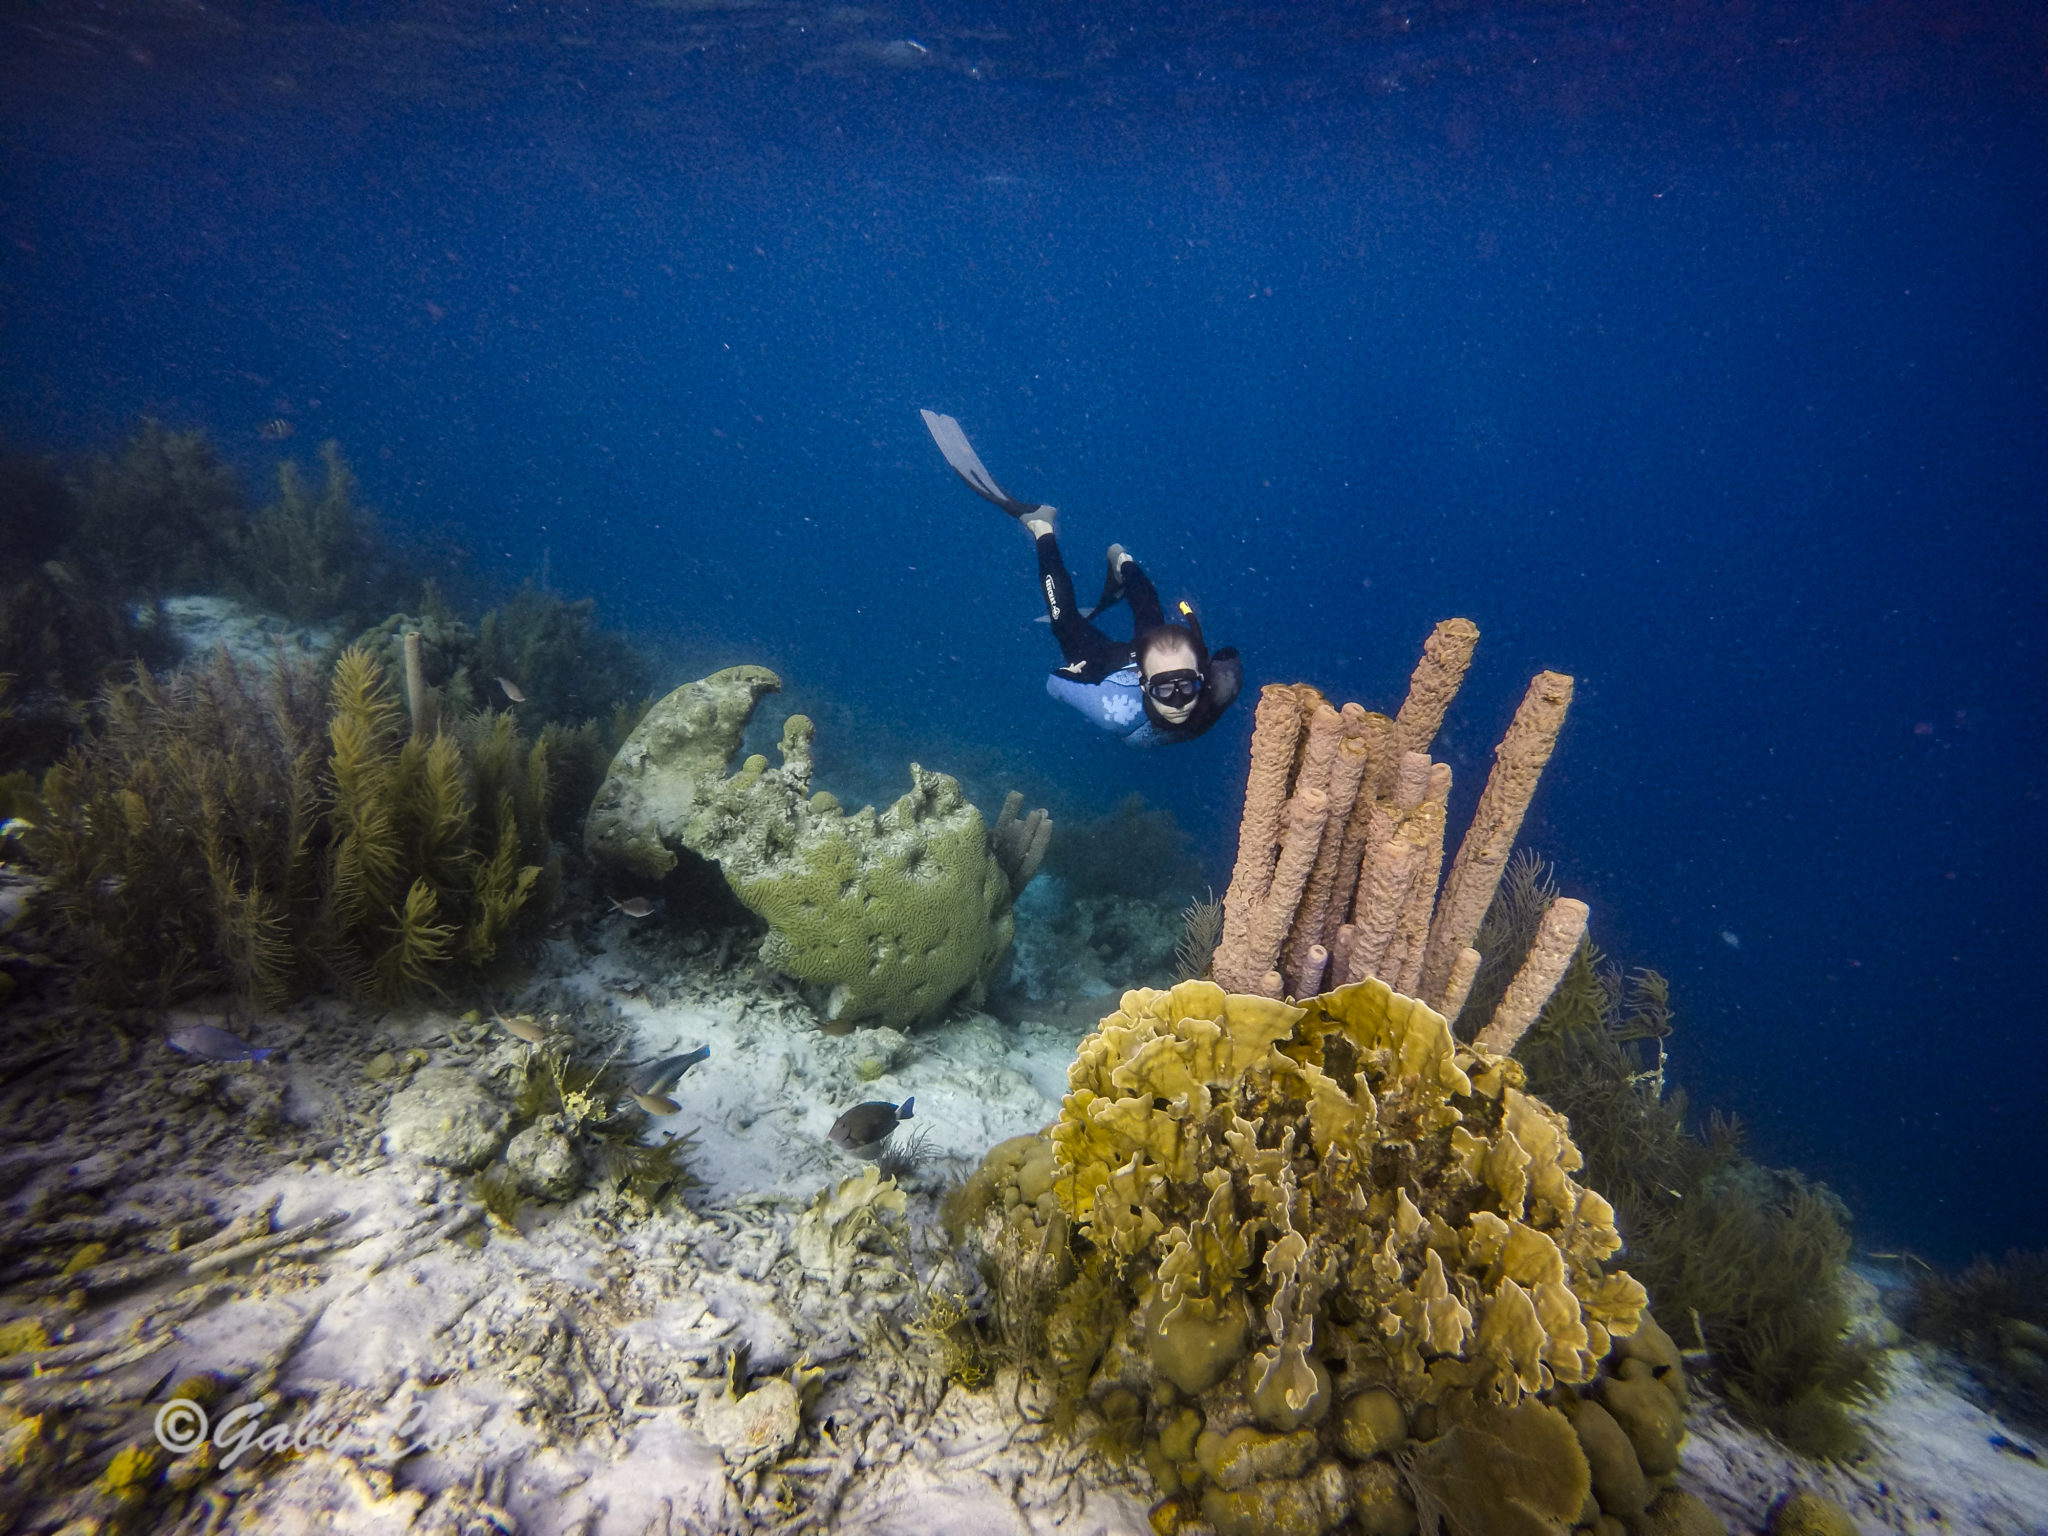 gabyocean, Professional Underwater Photos and Video Shoot